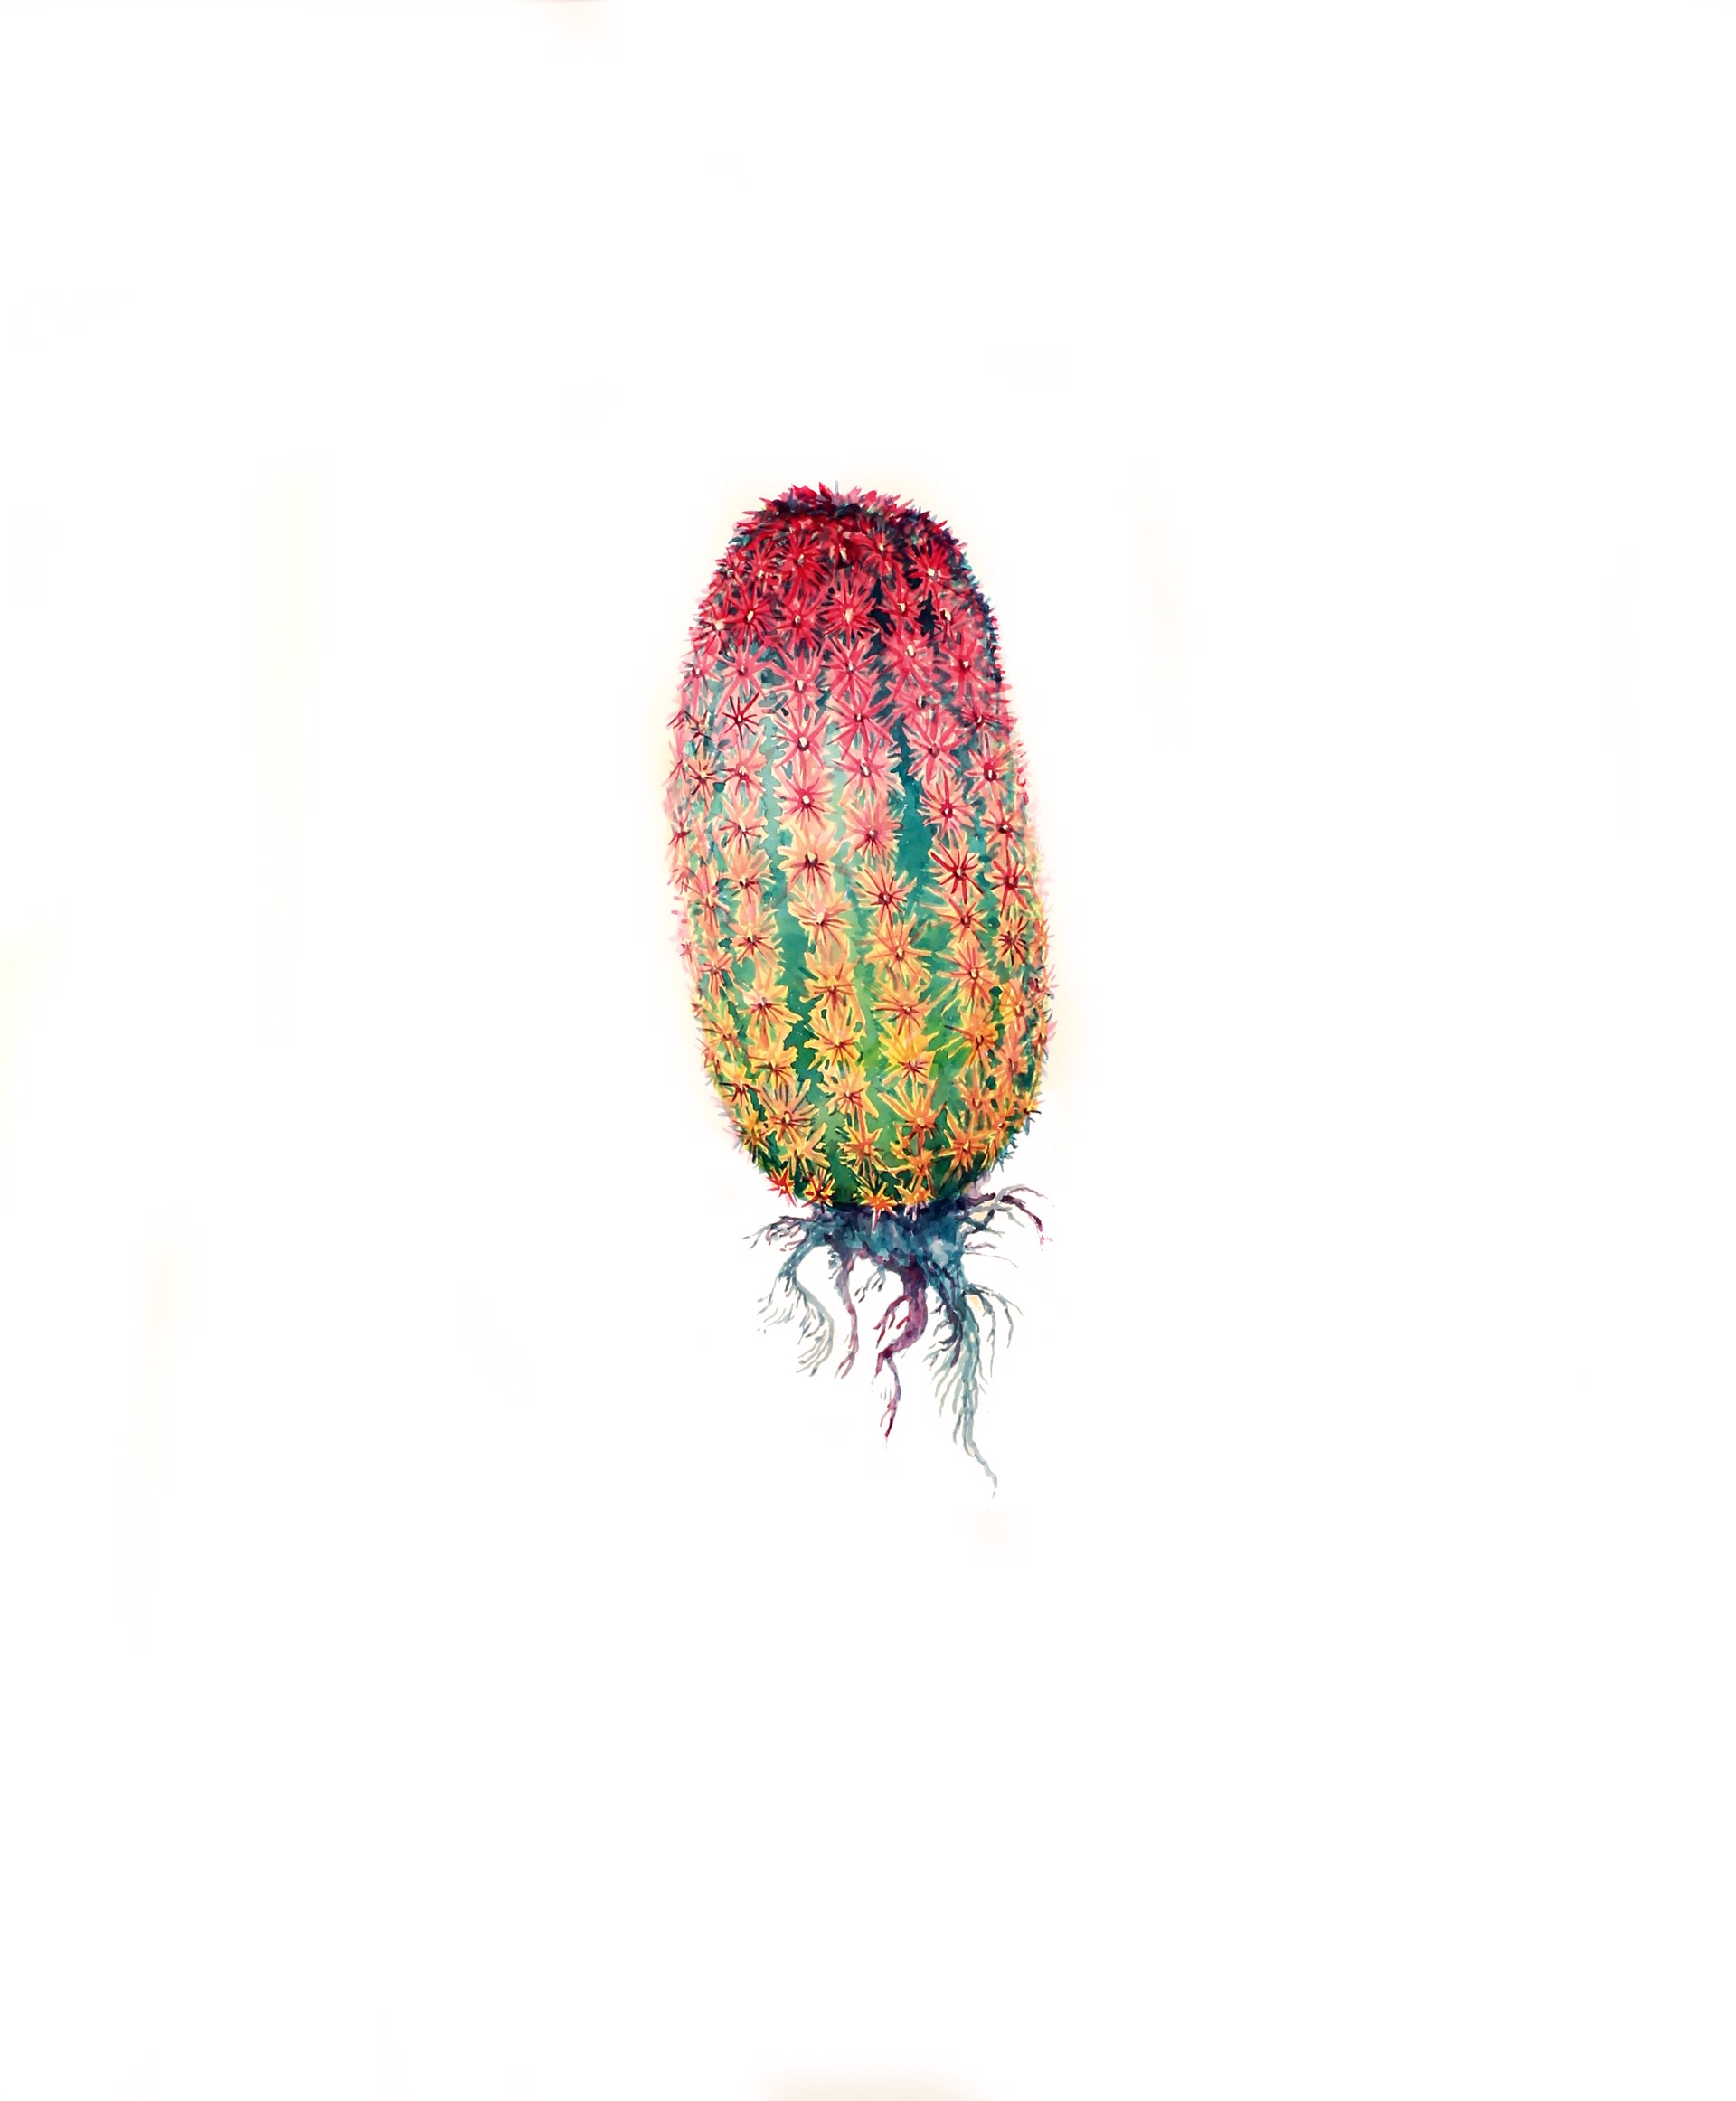 Rainbow Cactus by Todd Ryan White